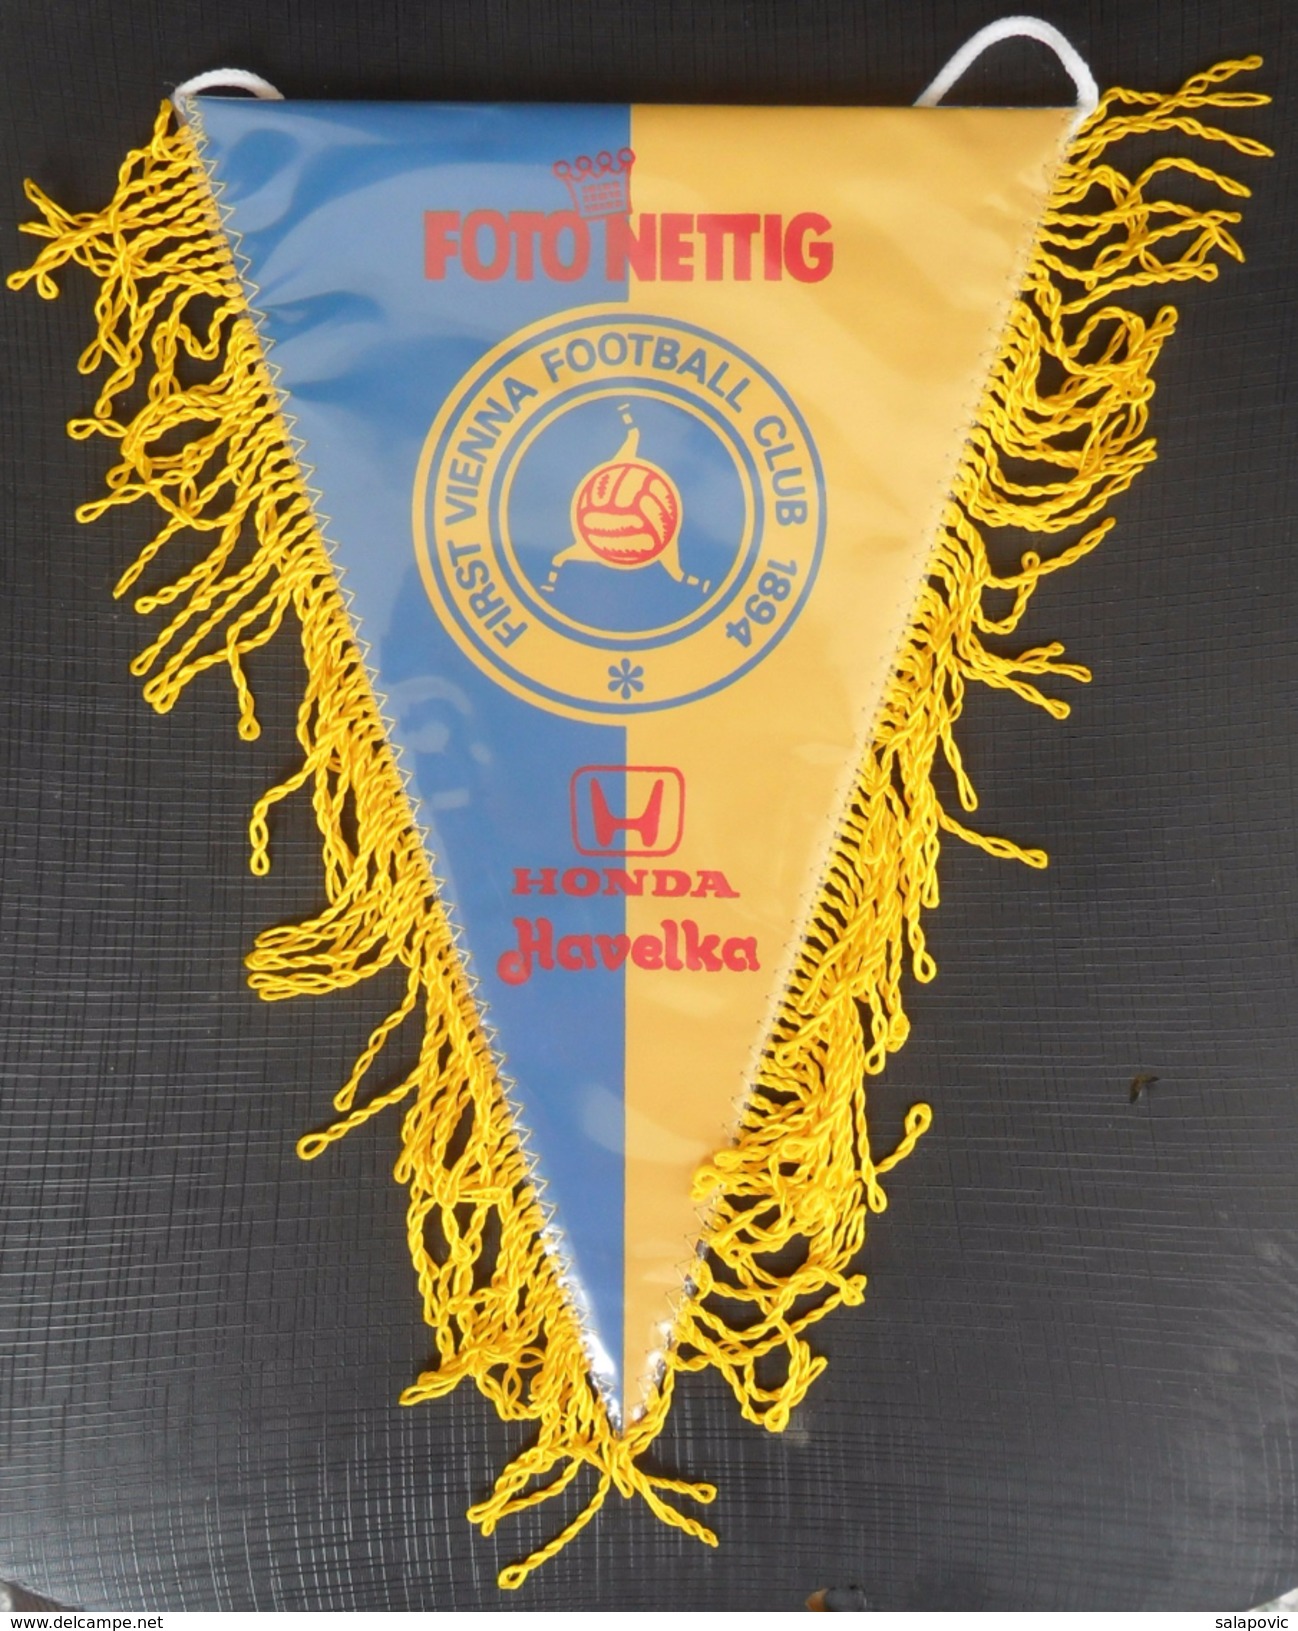 First Vienna FC AUSTRIA FOOTBALL CLUB, SOCCER / FUTBOL / CALCIO OLD PENNANT, SPORTS FLAG - Kleding, Souvenirs & Andere